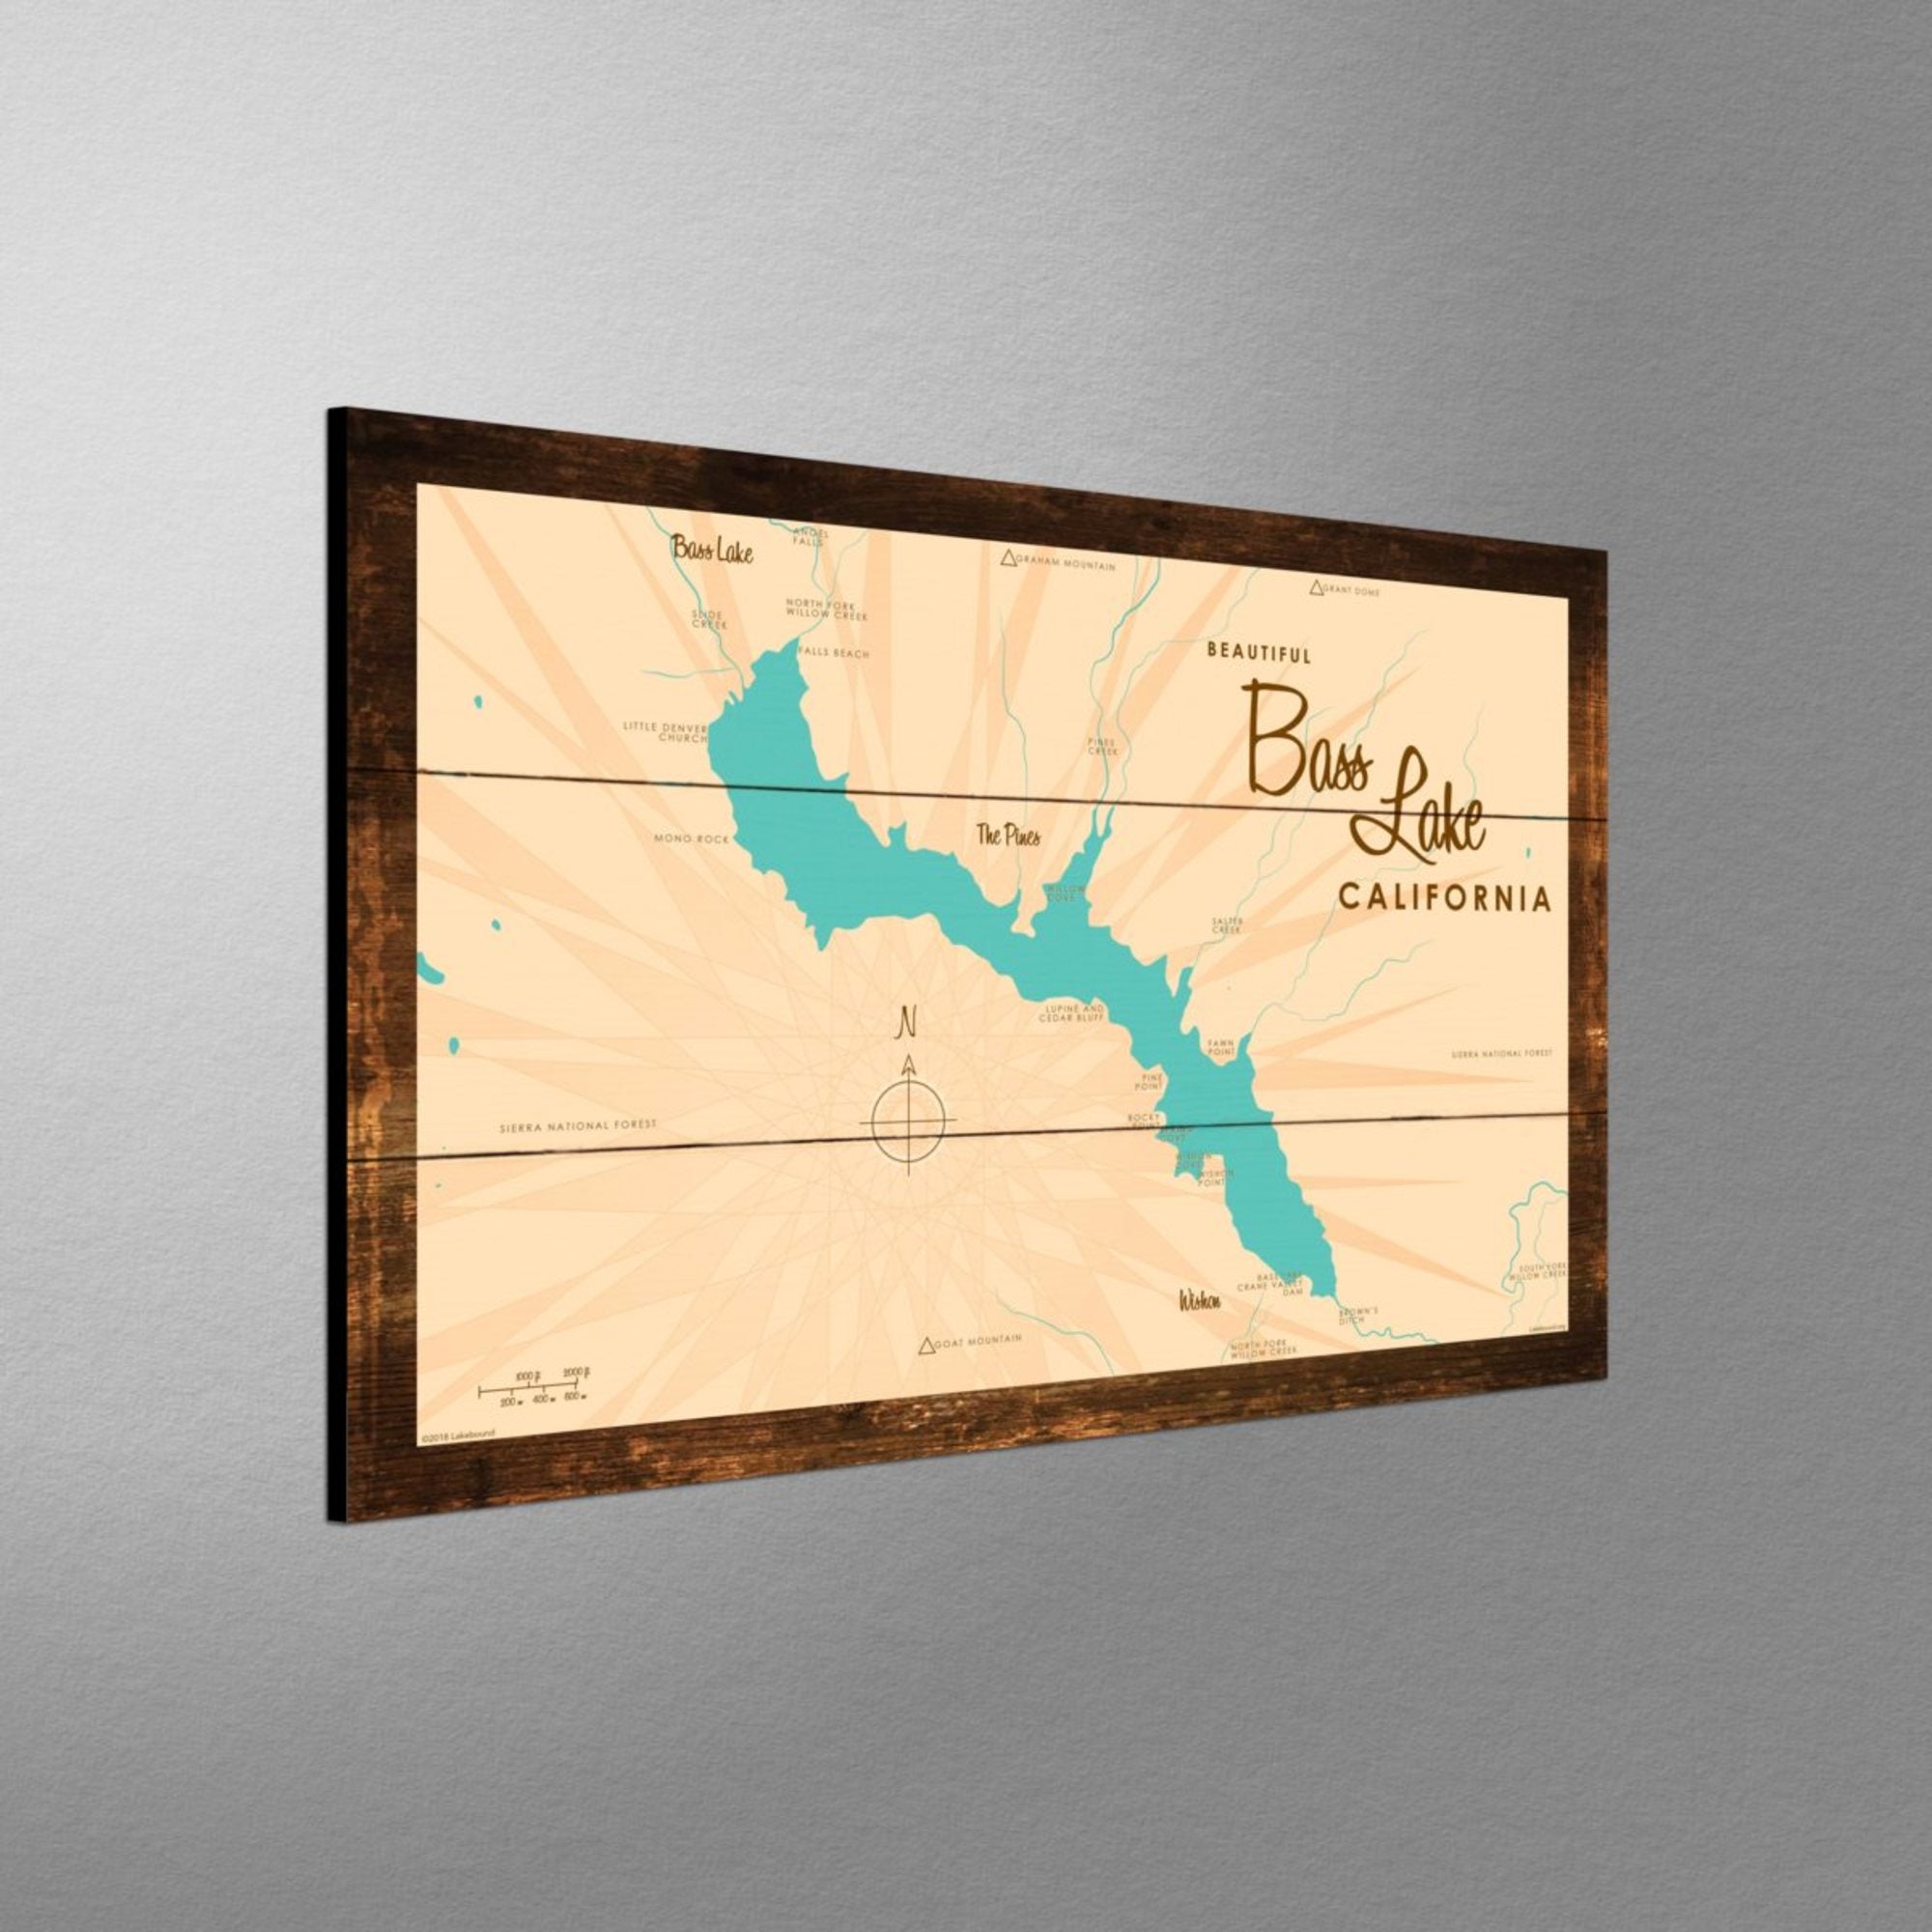 Bass Lake California, Rustic Wood Sign Map Art